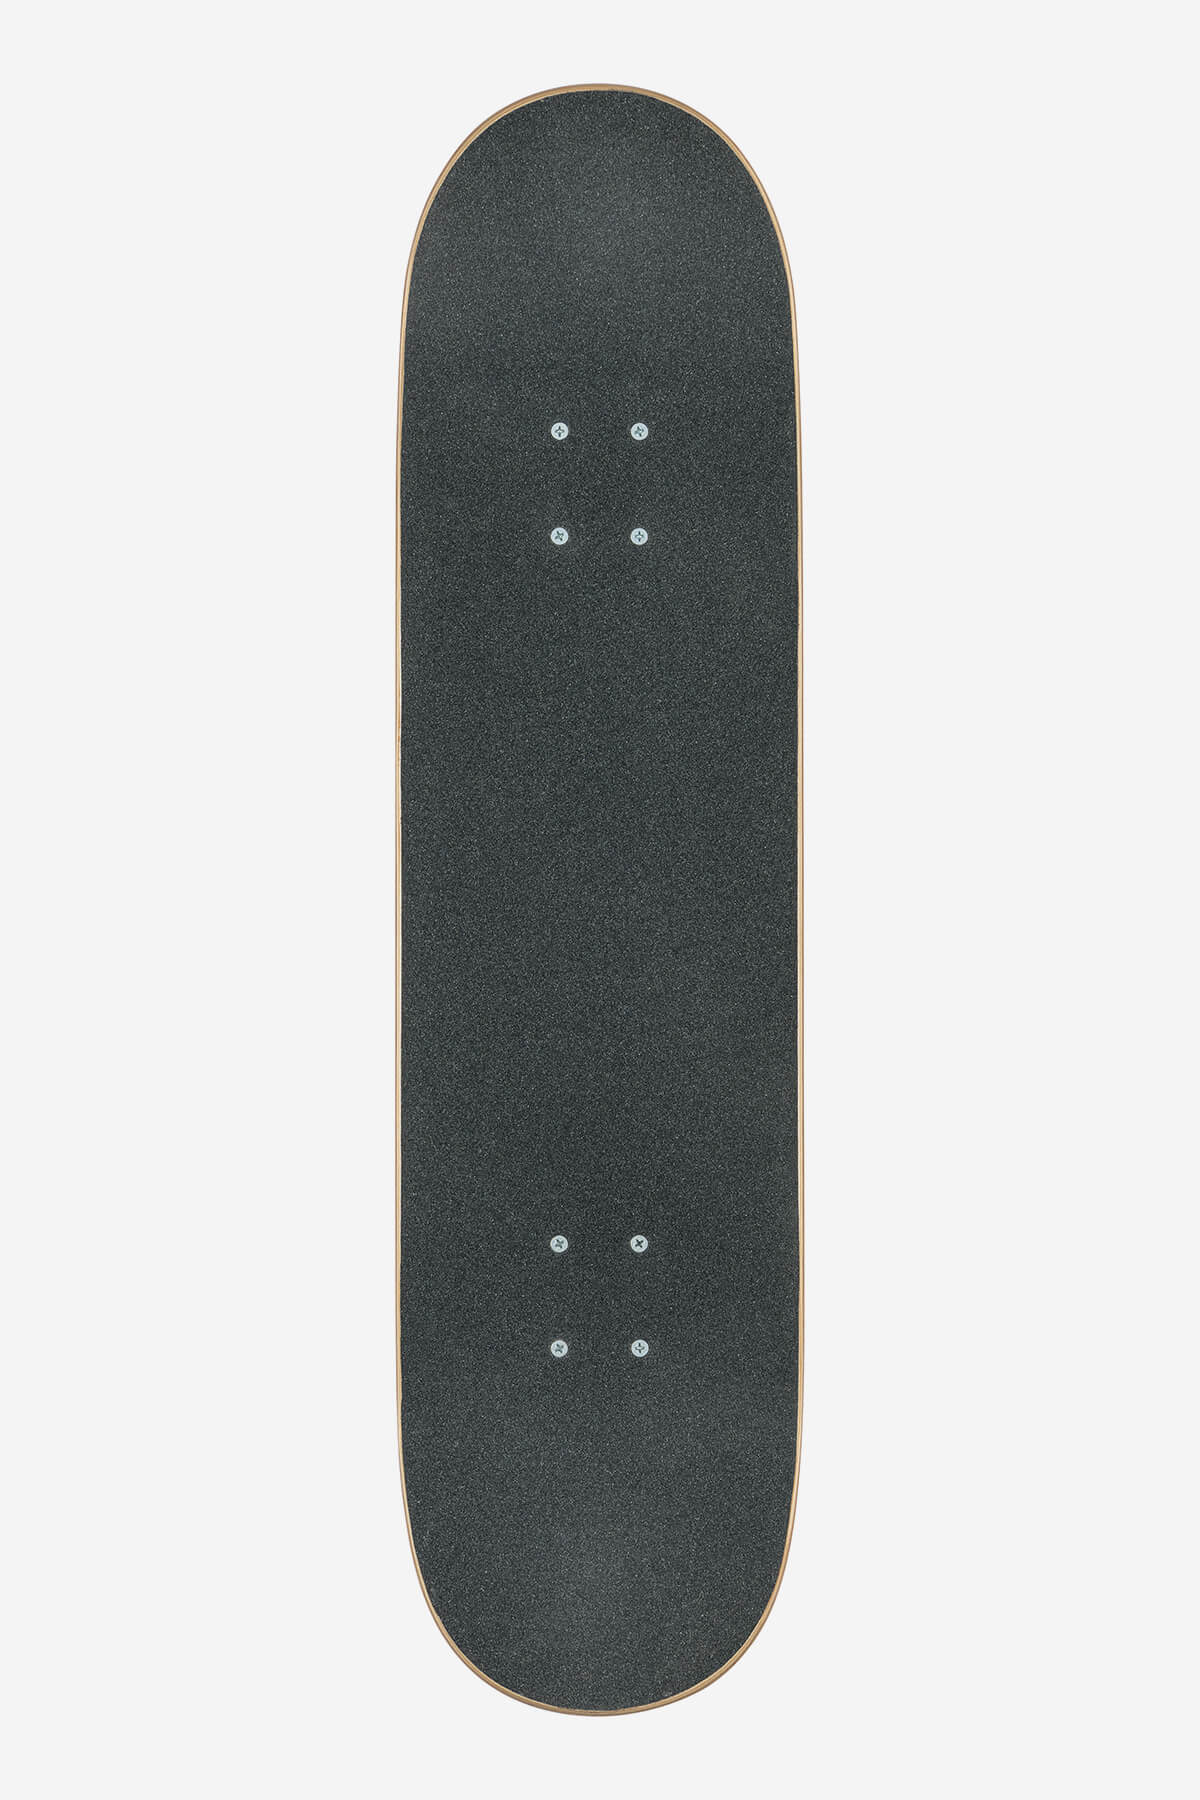 Globe - G0 Fubar - Red/White - 8.25" Complete Skateboard